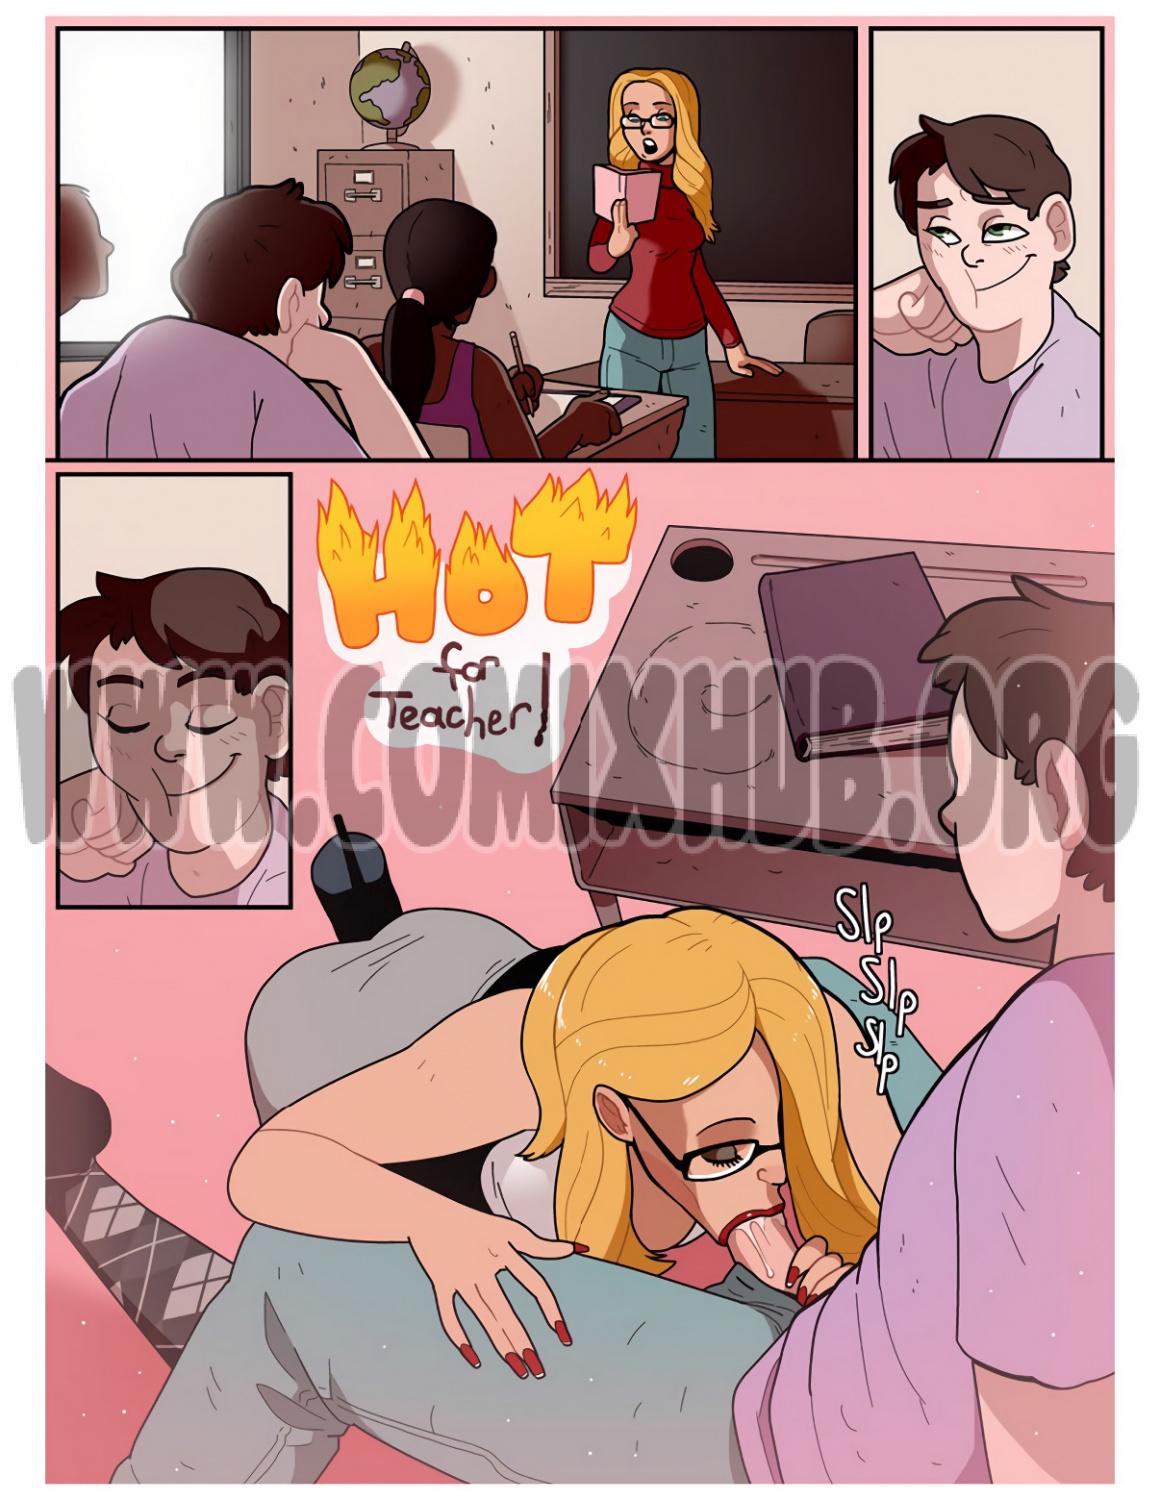 Hot For Teacher! - Blackshirtboy porn comics Oral sex, Big Tits, Blowjob, cunnilingus, Deformed, Glasses